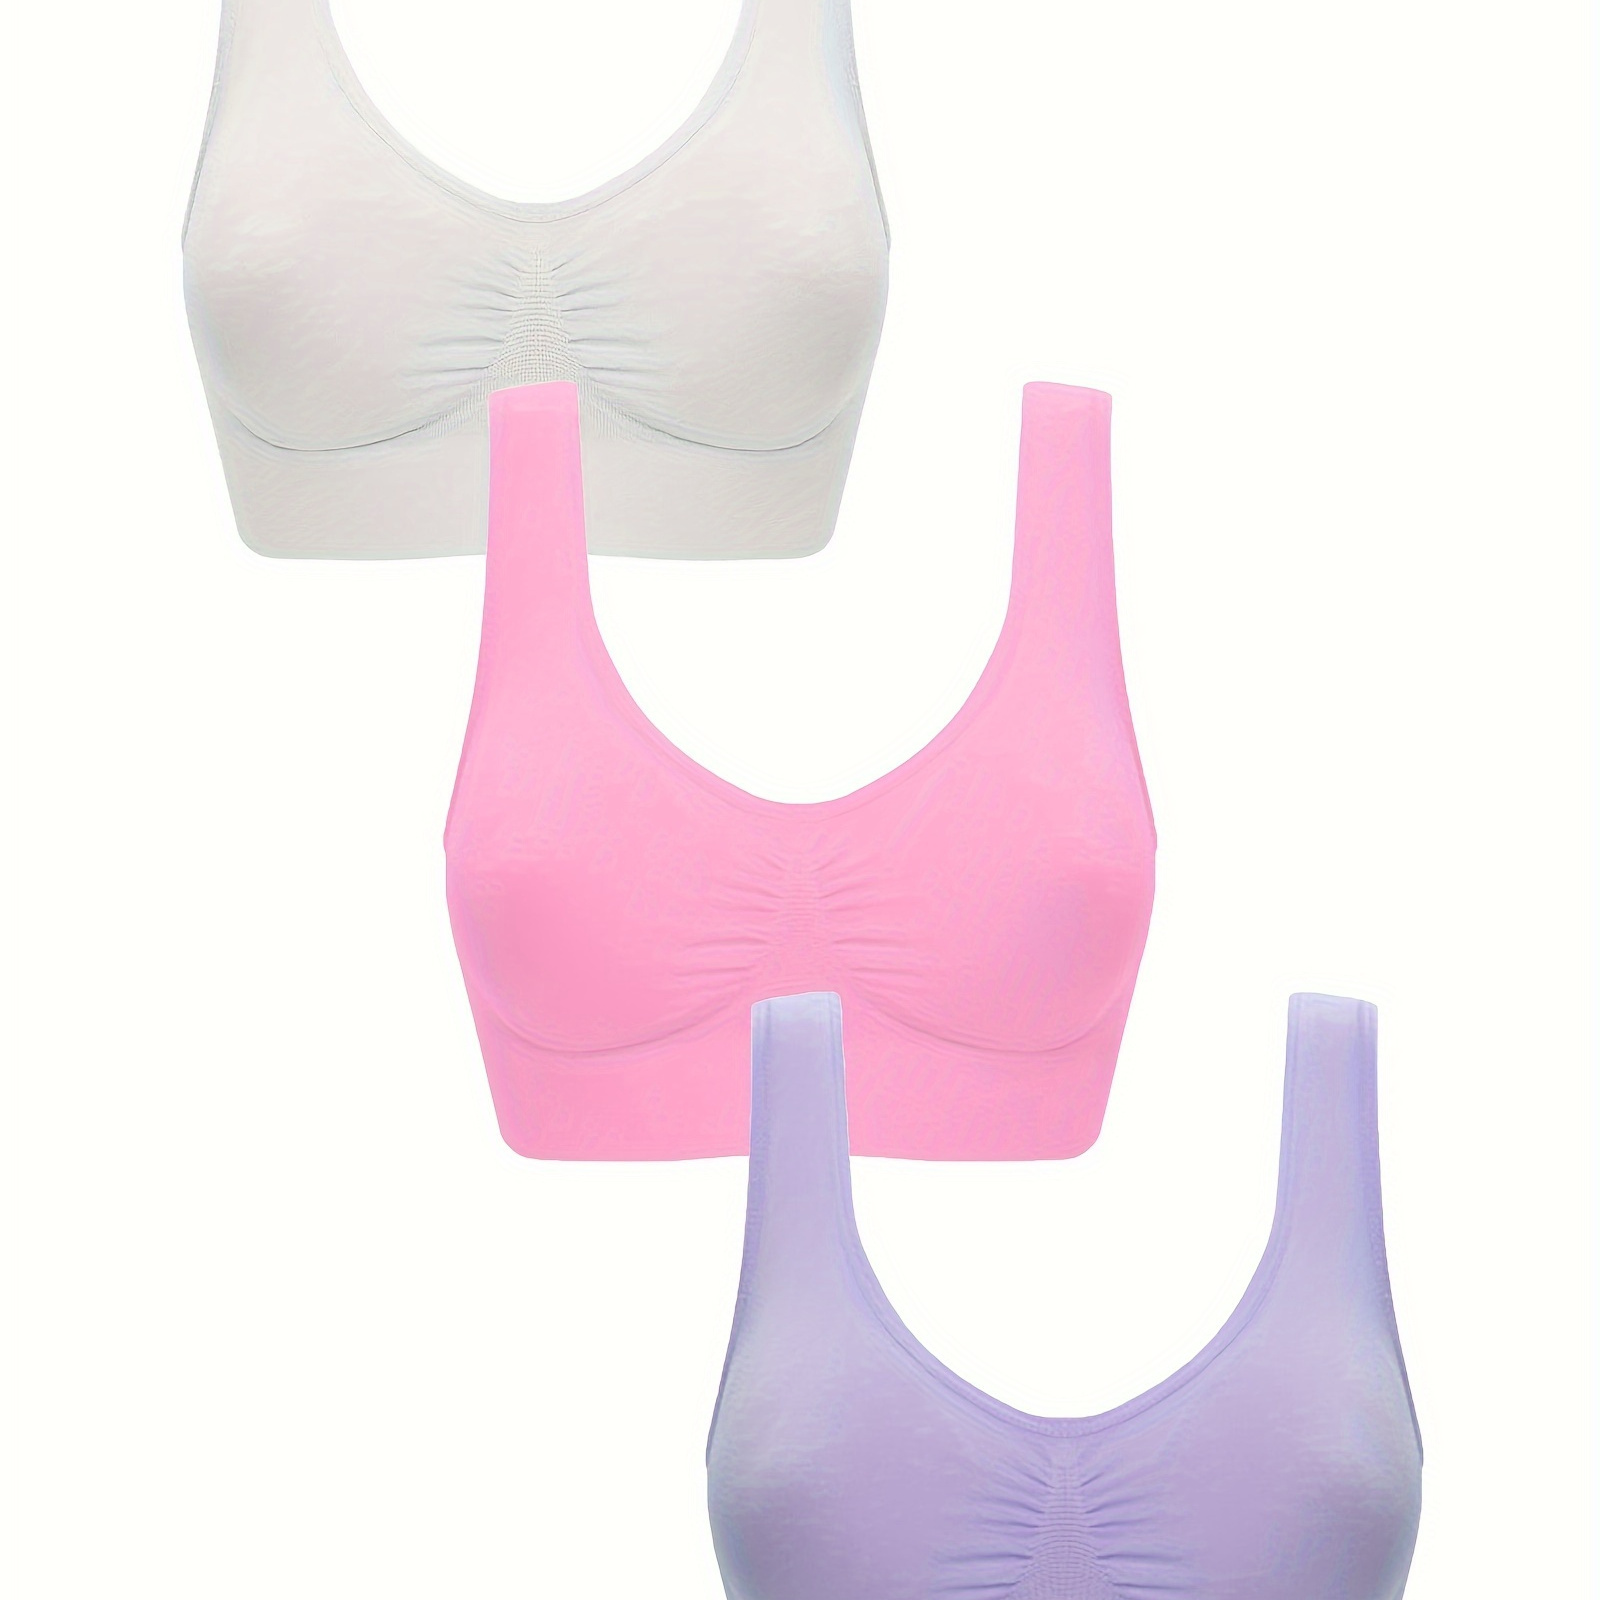 

3pcs Wireless Sports Bras, Comfy & Breathable Running Workout Tank Bra, women's Lingerie & Underwear